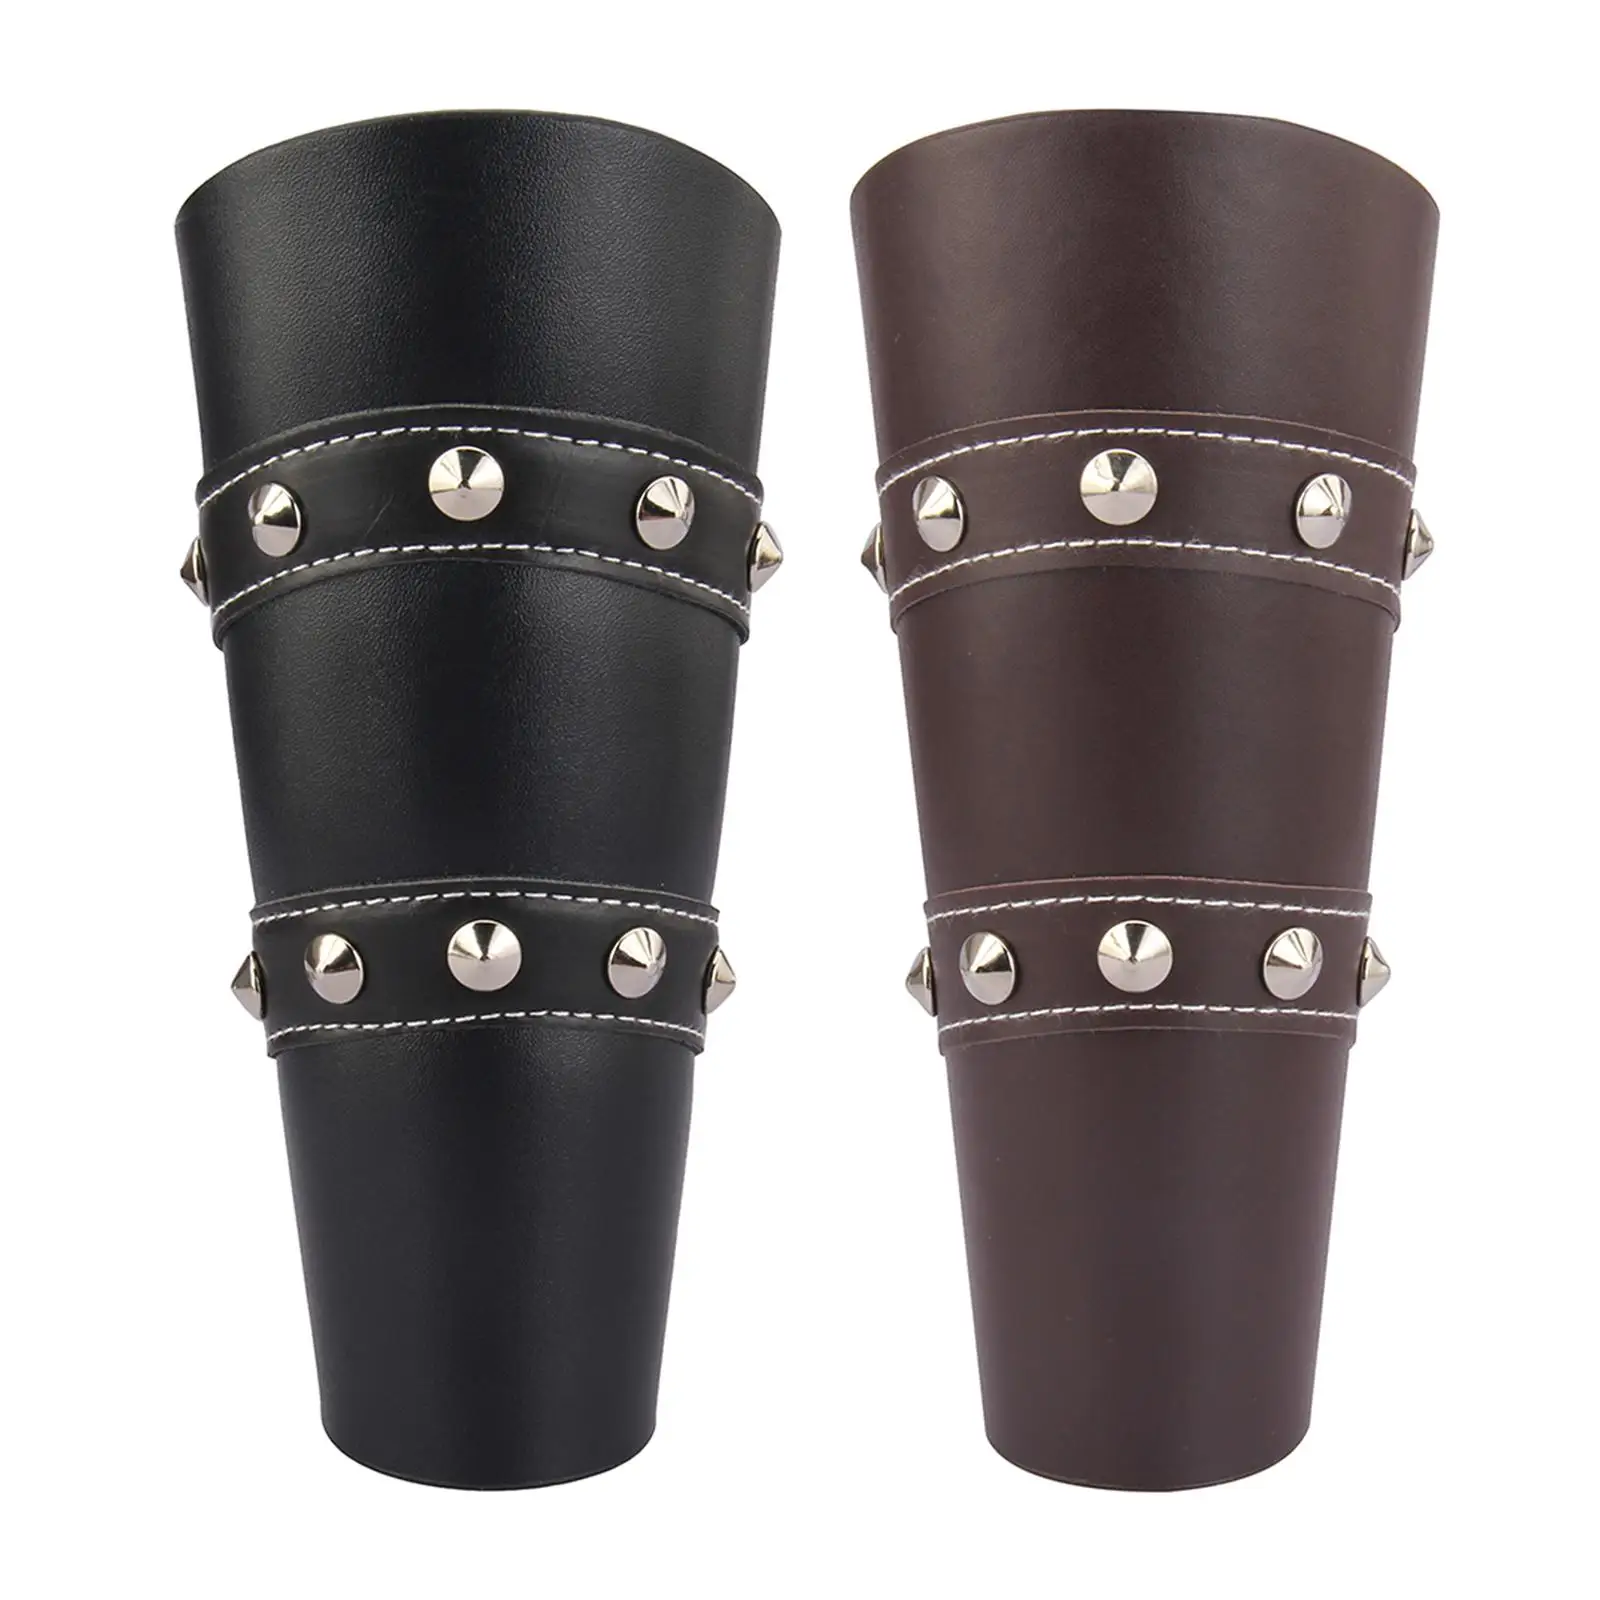 Wide Bracer Bracelet Gauntlets Adjustable Punk Gothic Retro Arm Guards Protection for Men Women Cosplay Props Easter Graduations